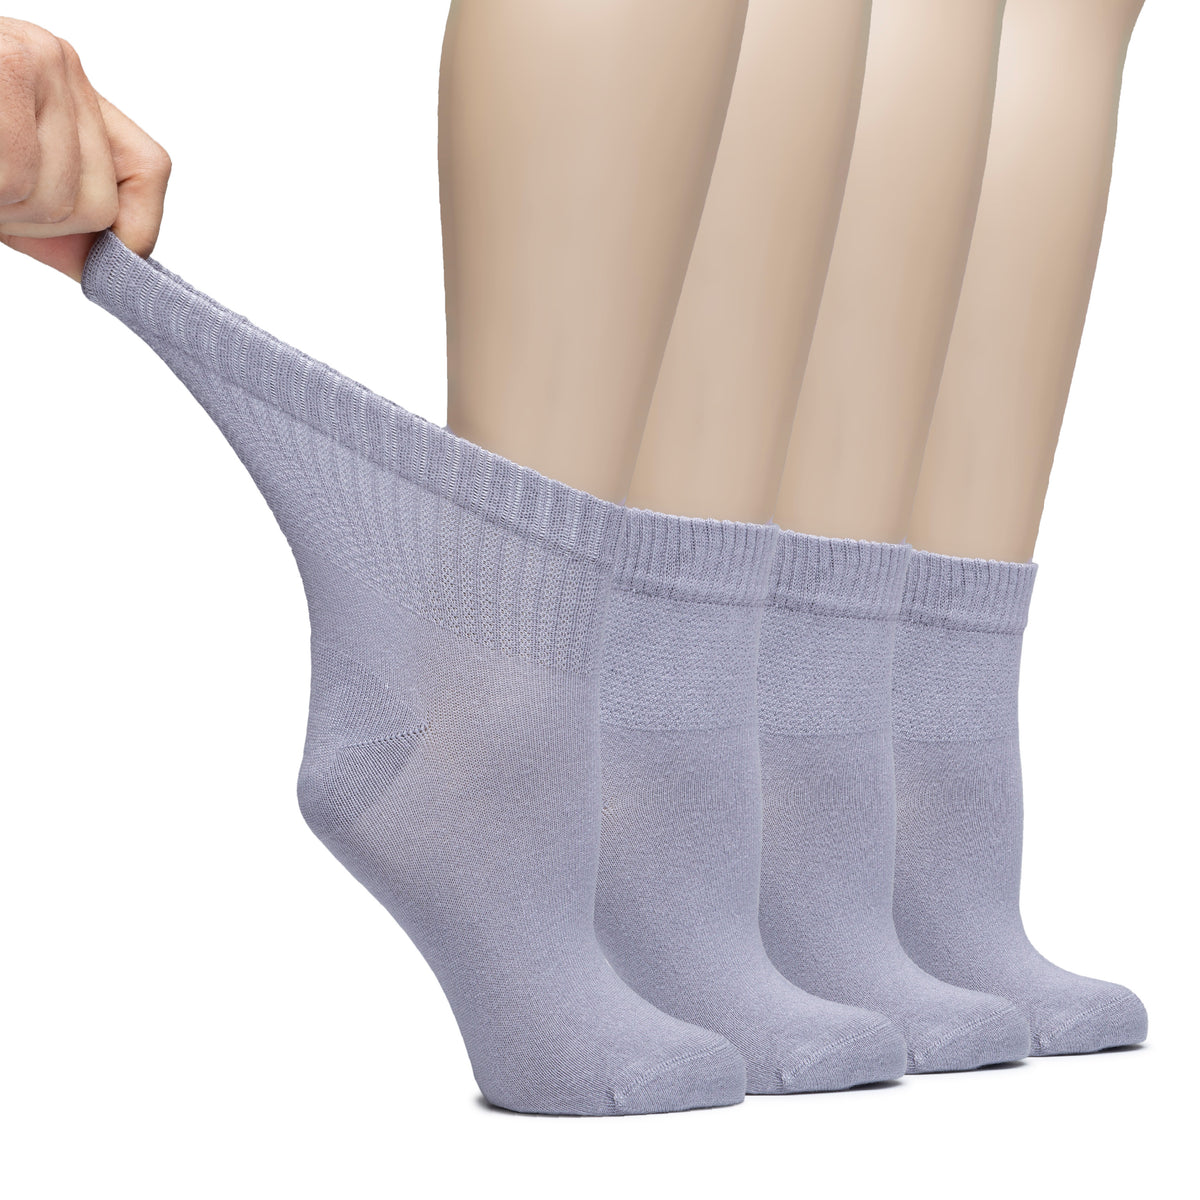 Hugh Ugoli Lightweight Women's Diabetic Ankle Socks Bamboo Thin Socks Seamless Toe and Non-Binding Top, 4 Pairs, , Shoe Size: 6-9/10-12 | Shoe Size: 10-12 | Purplish Gray